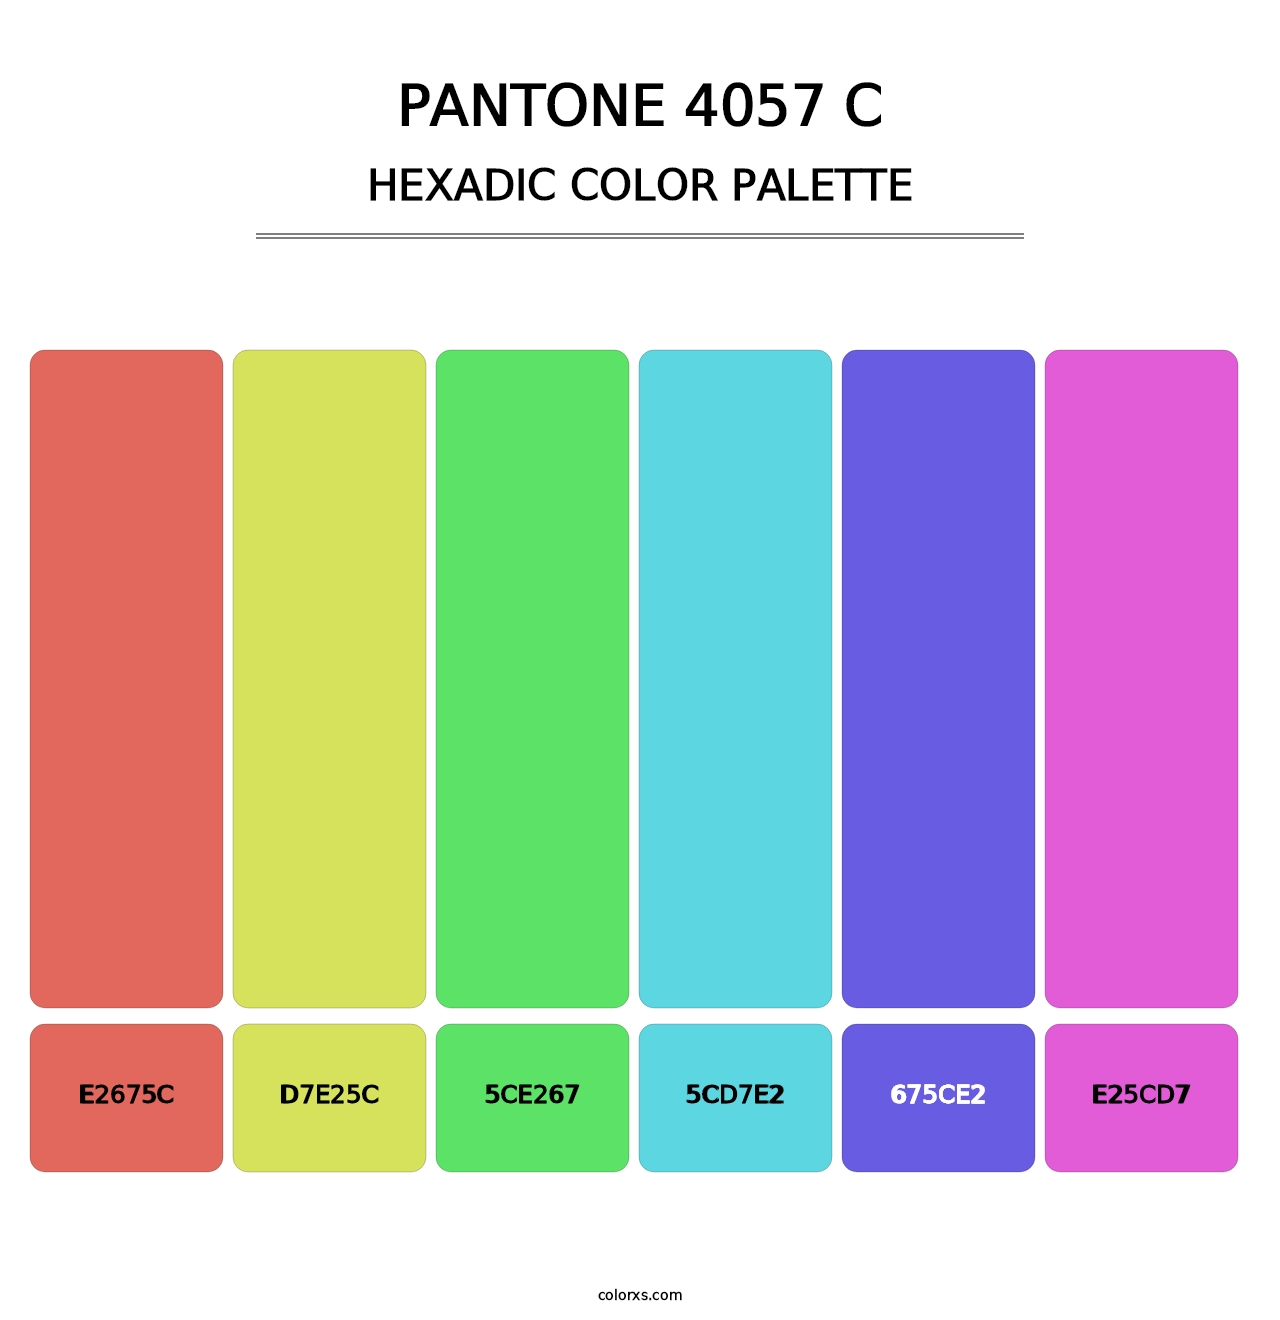 PANTONE 4057 C - Hexadic Color Palette